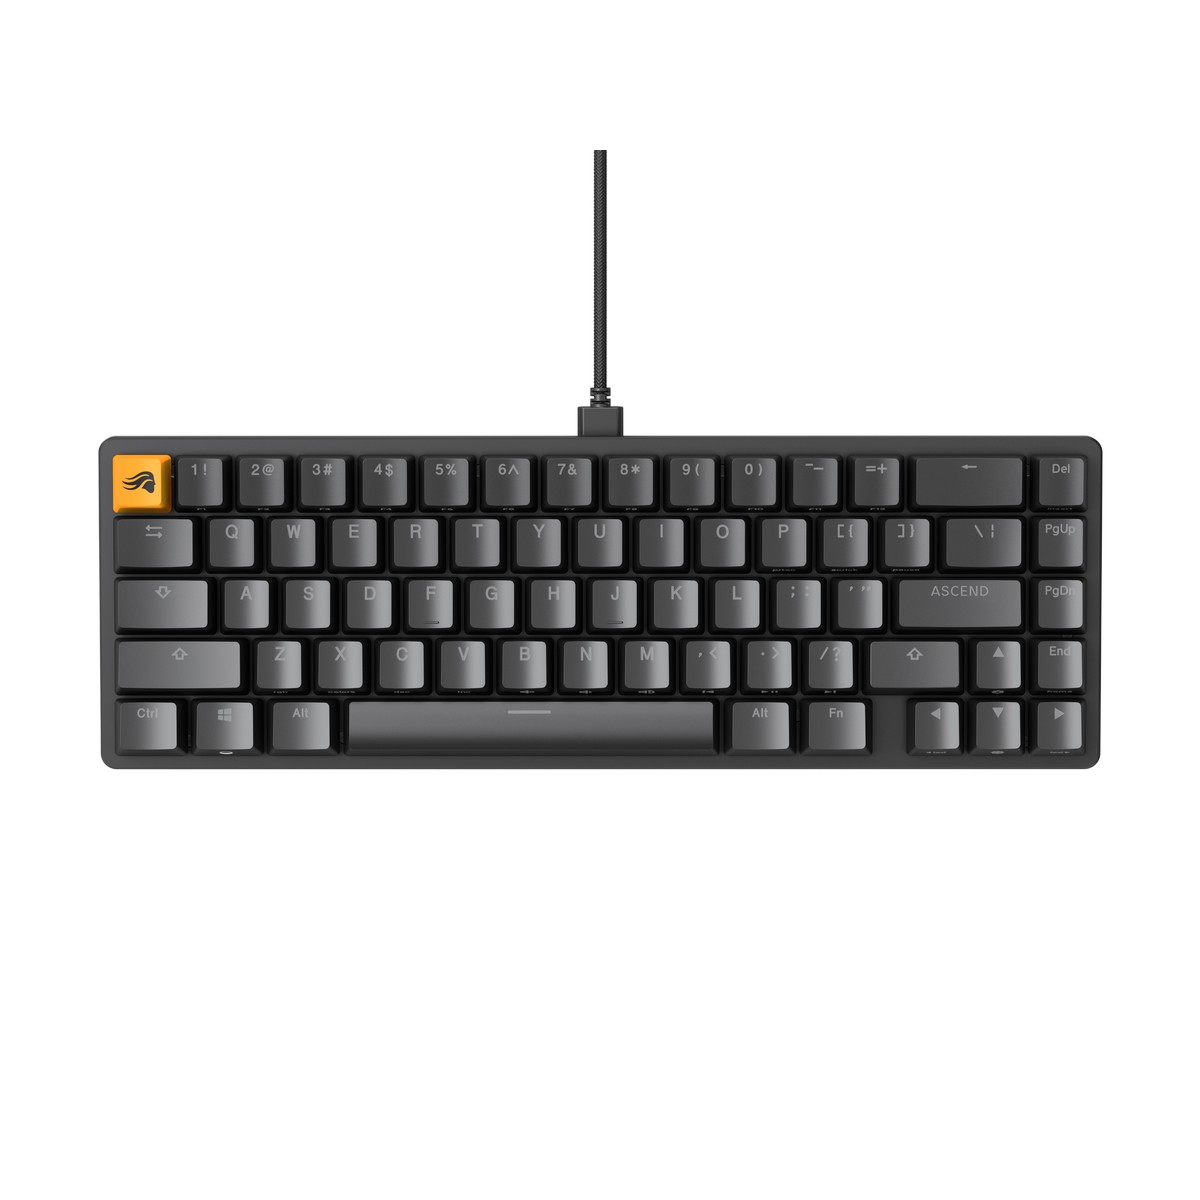 Glorious - Glorious GMMK 2 65% Mechanical Gaming Keyboard - Fox switch ANSI-US - Black